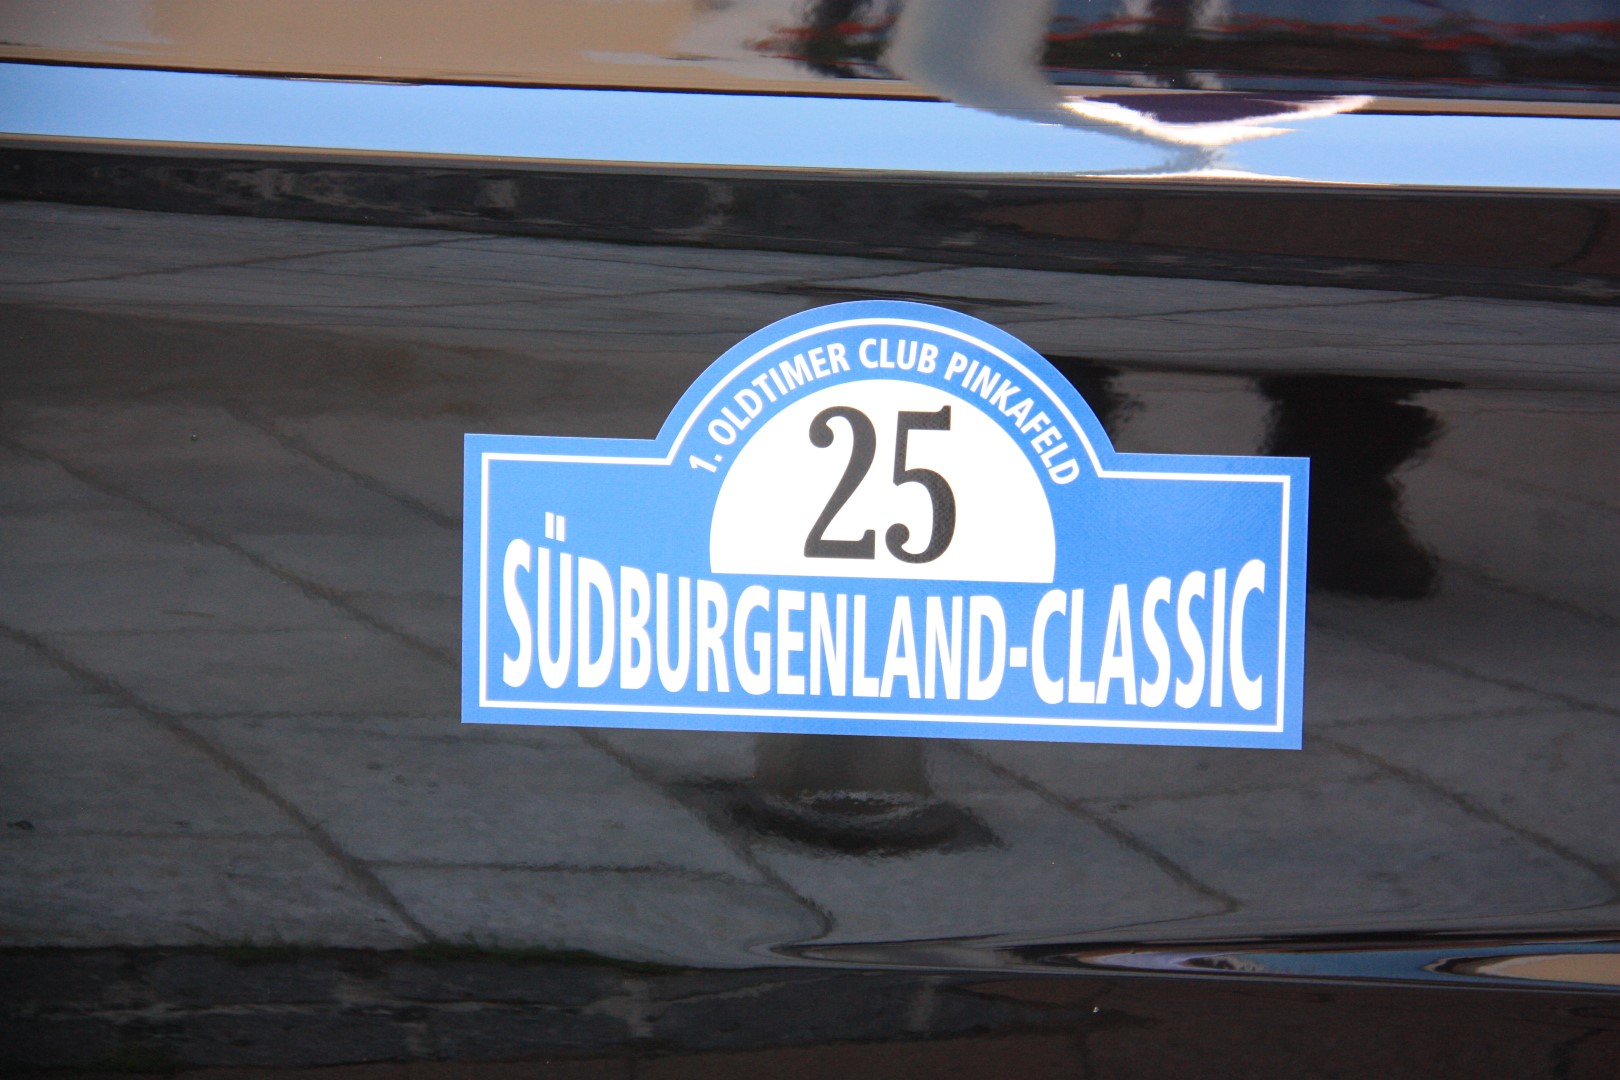 2017-06-11 1.Sdburgenland-Classic Bad Tatzmannsdorf 5